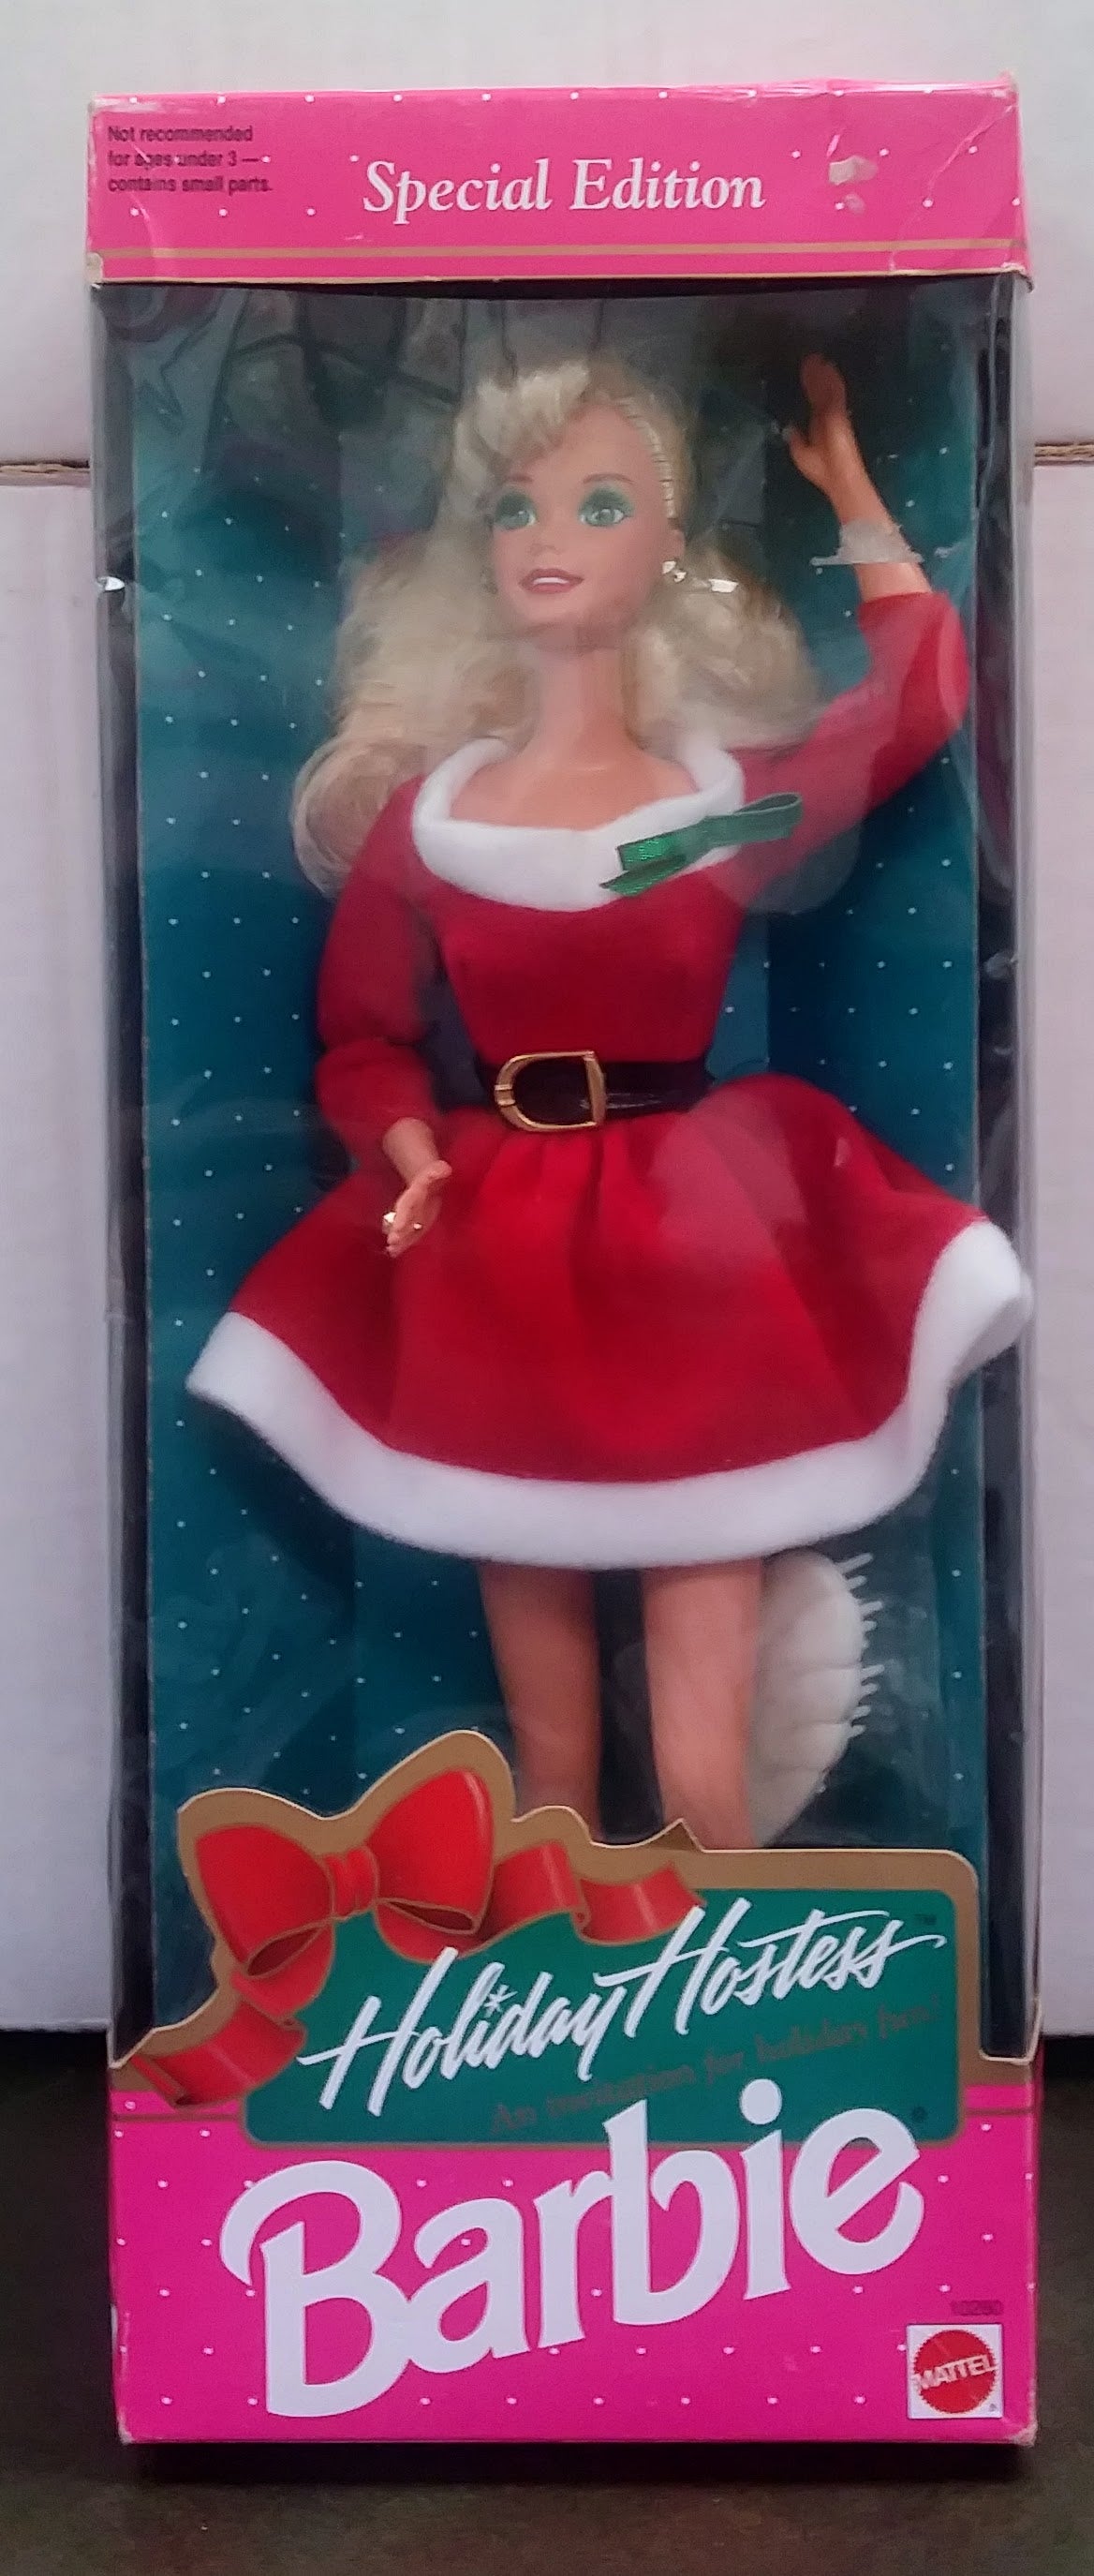 Barbie Doll - Holiday Hostess Barbie (1992)